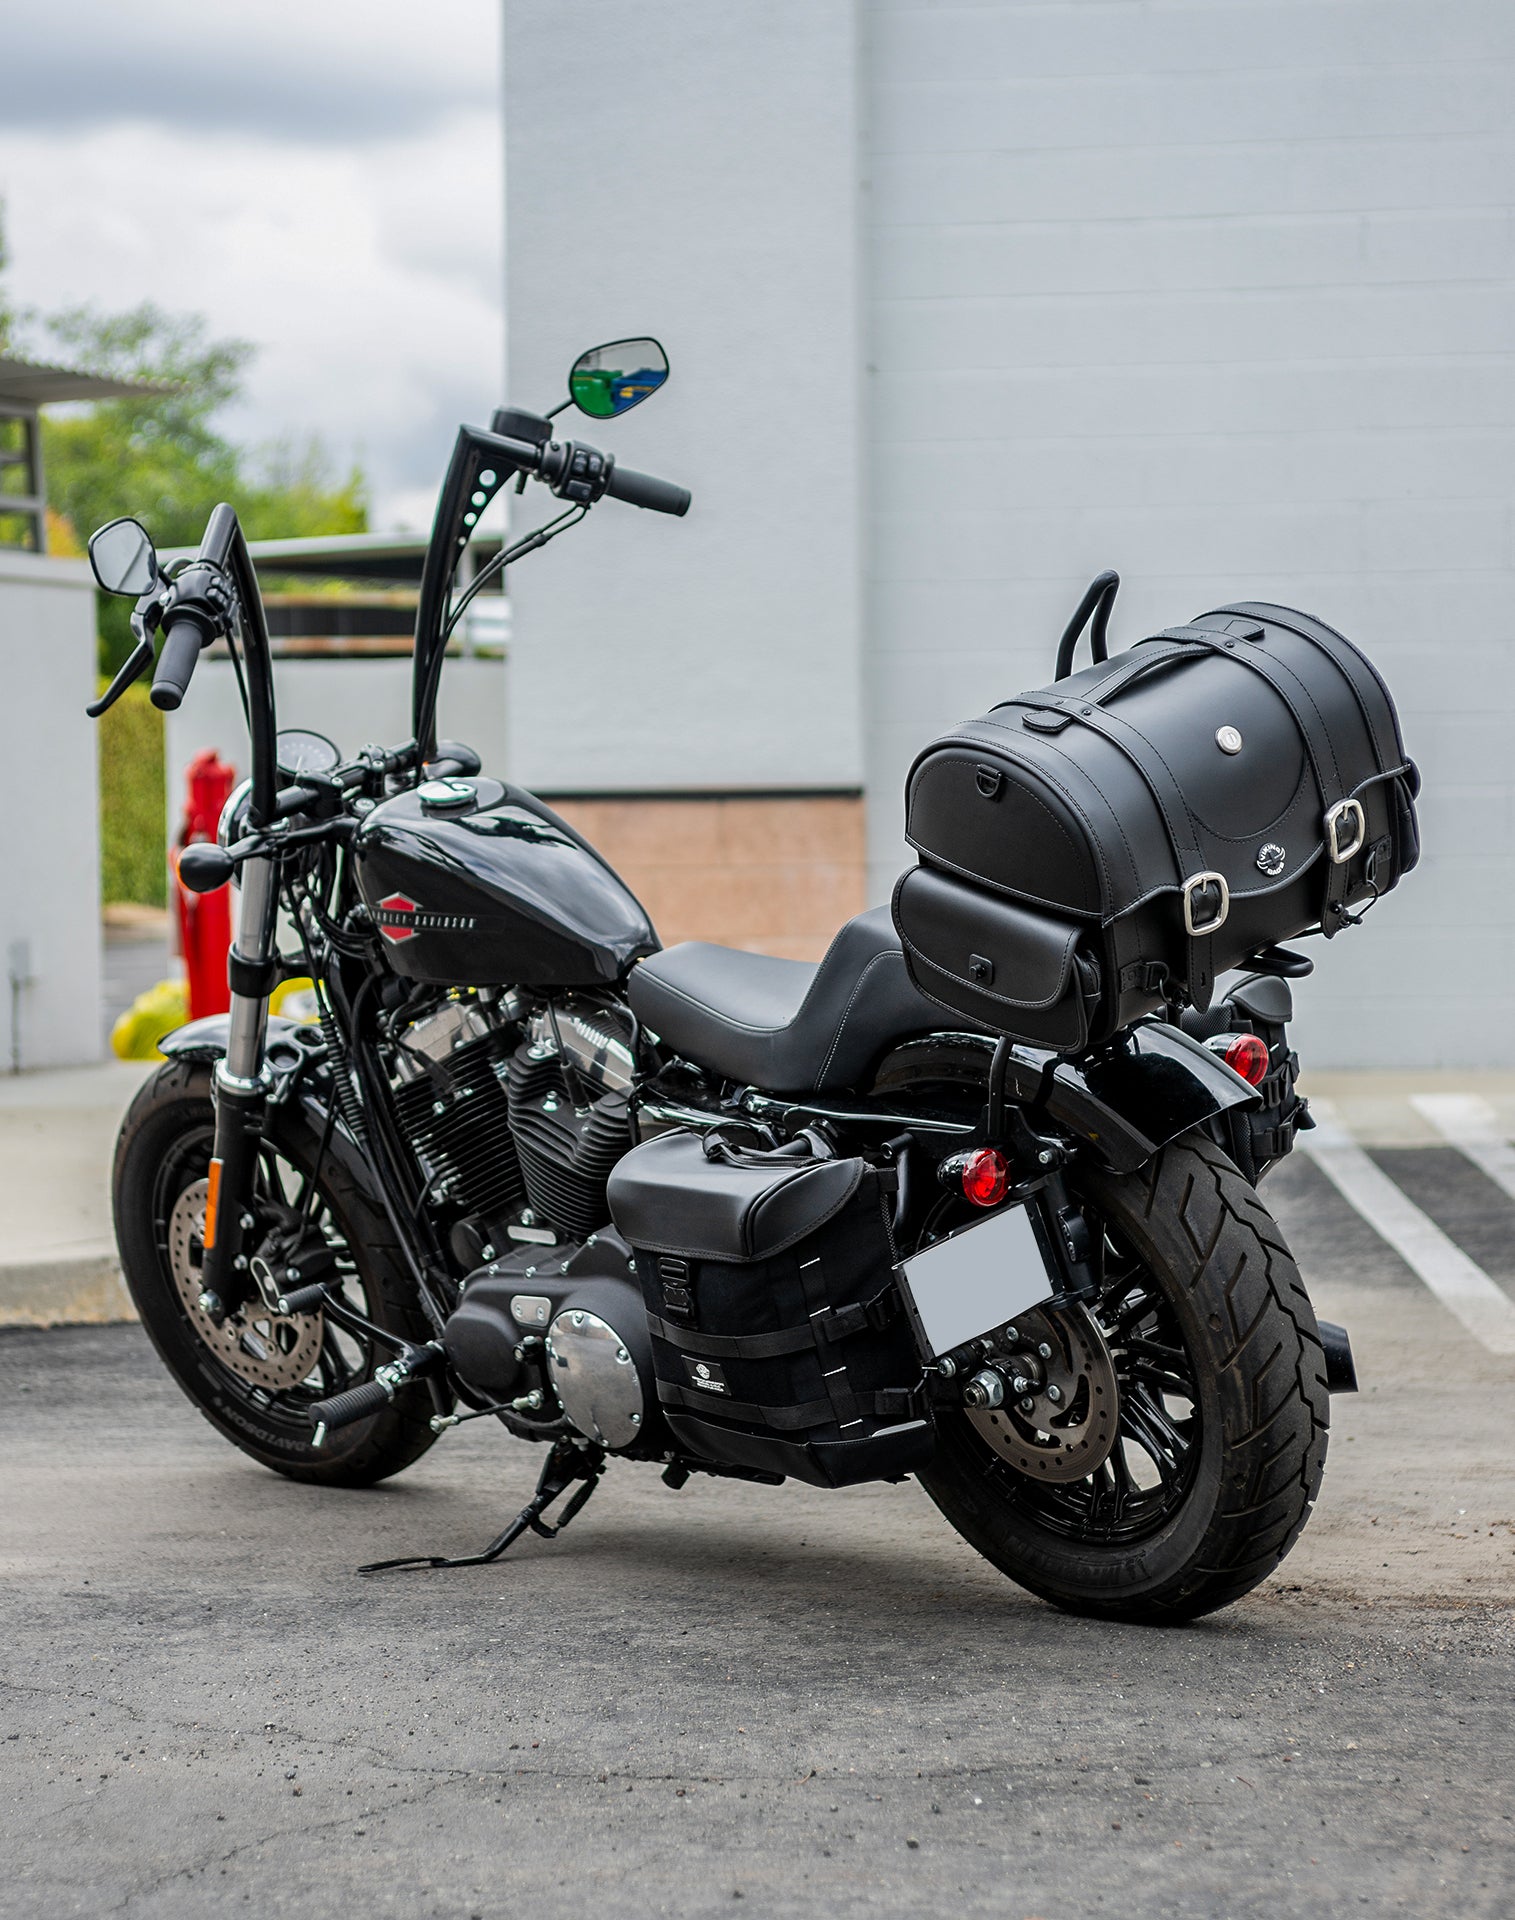 18L - Century Medium Triumph Leather Motorcycle Sissy Bar Bag